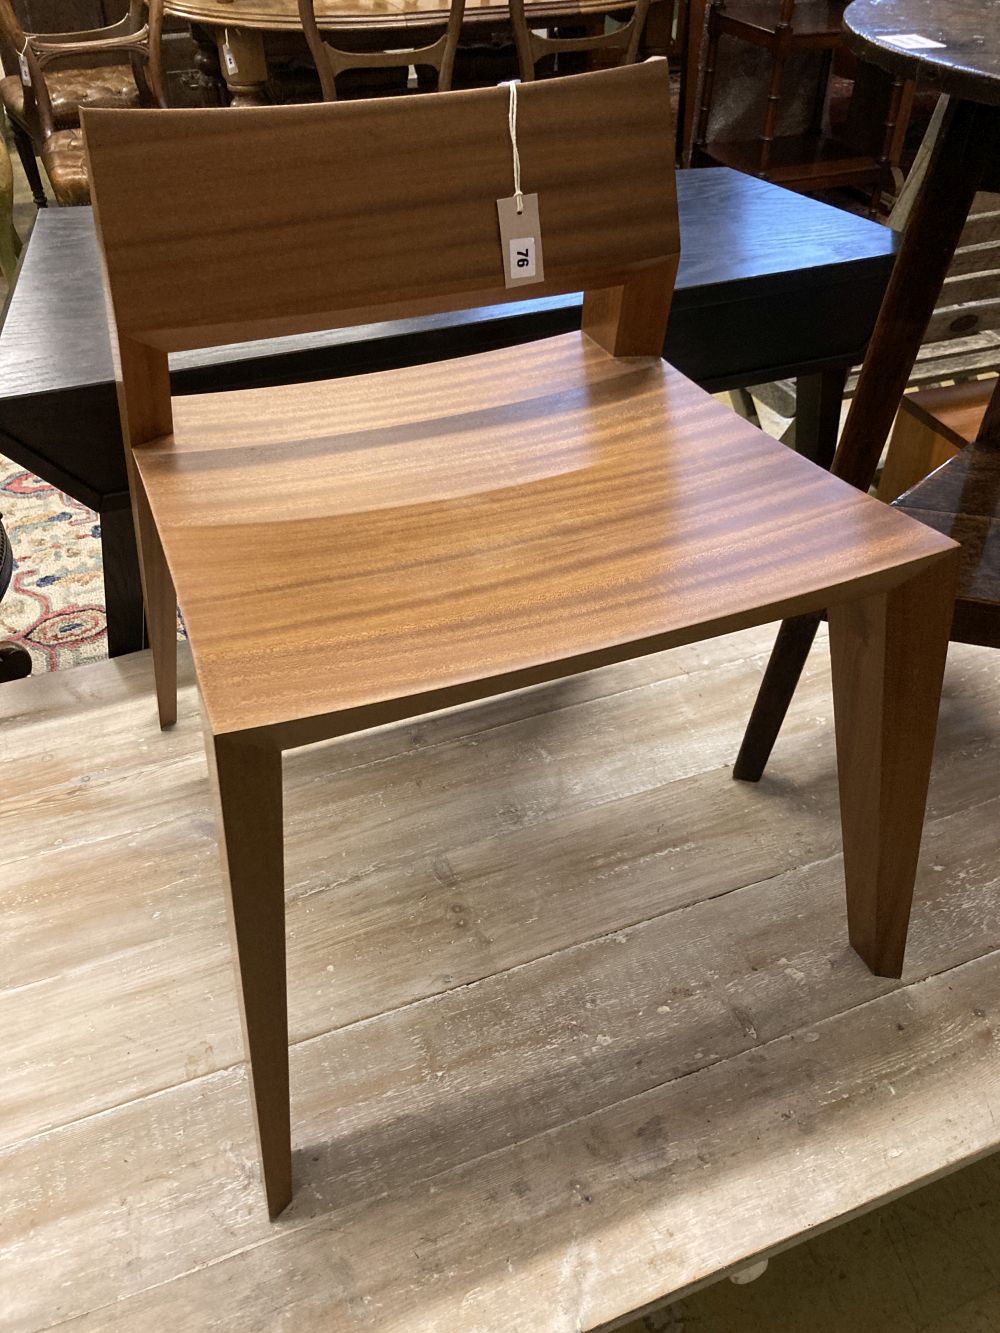 A Christopher Coane design sapele wood stout side chair